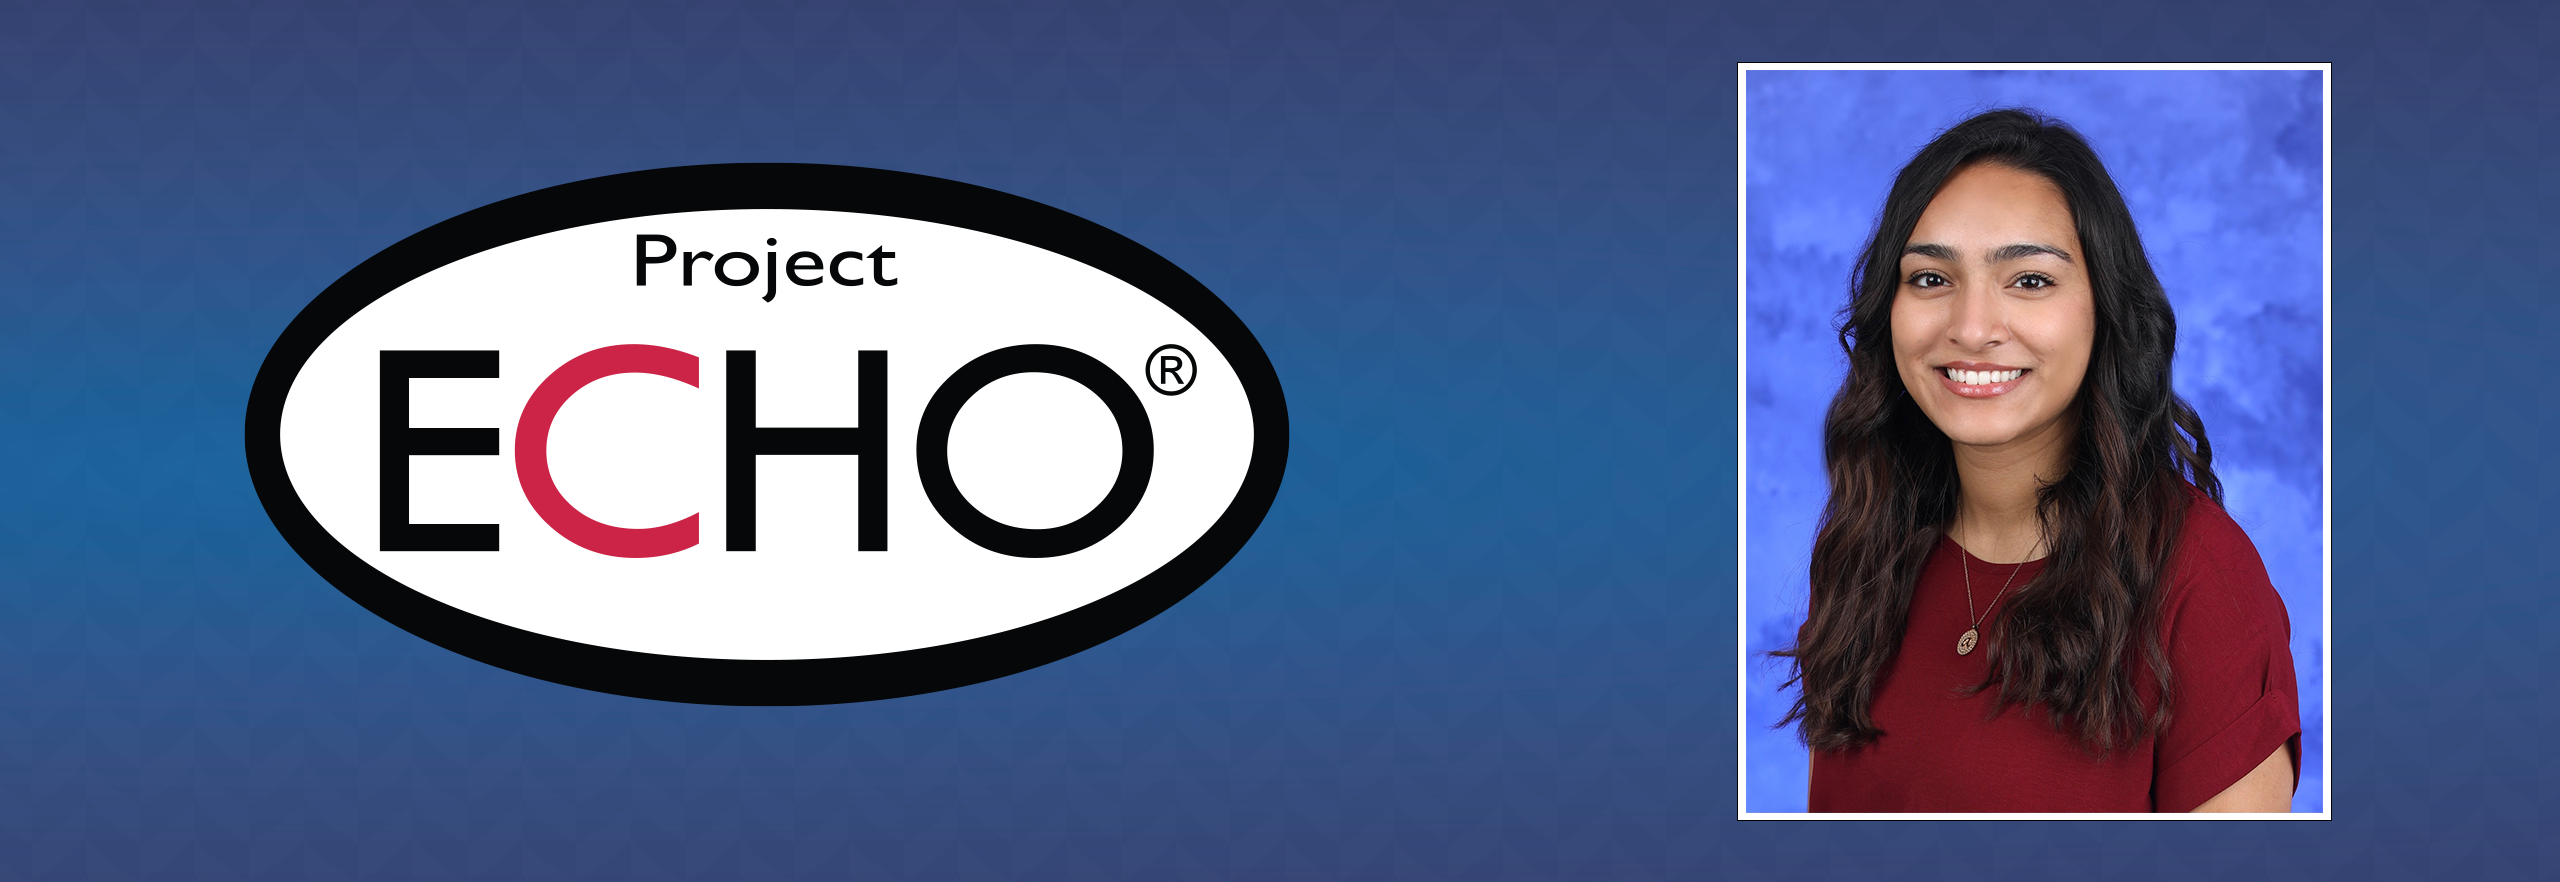 Project ECHO logo with a professional portrait of Ashmita Grewal